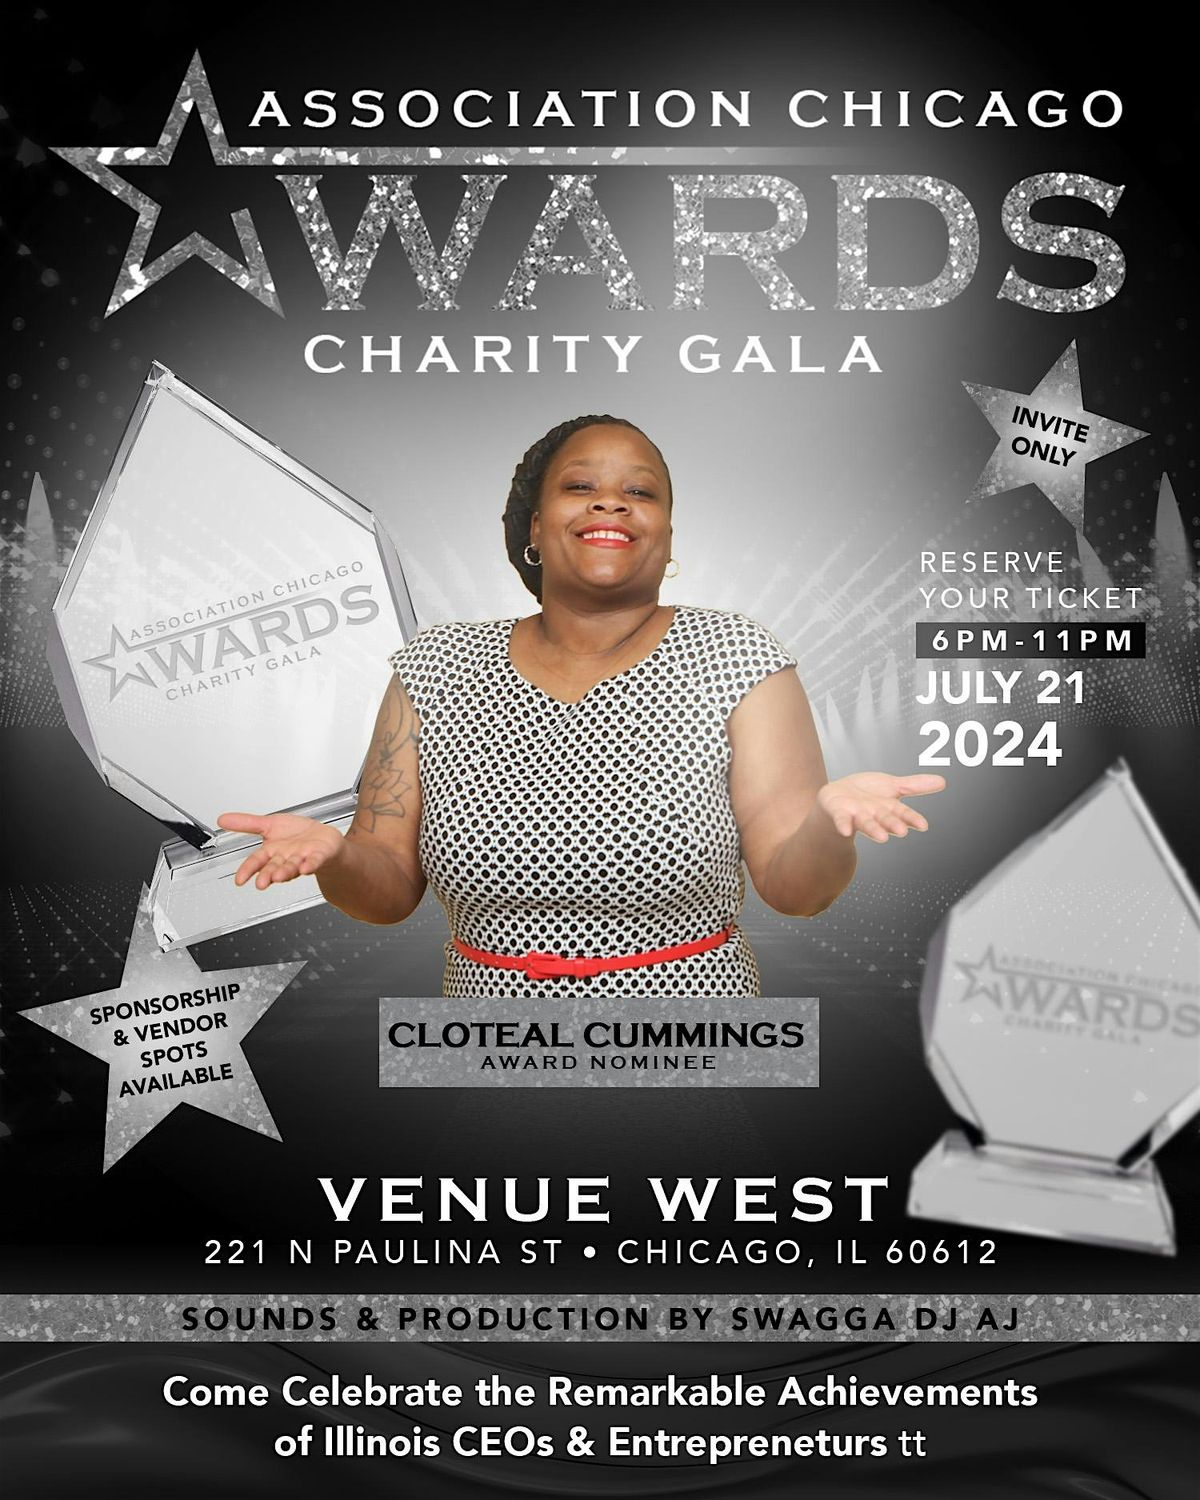 Association  Chicago Awards Charity Gala